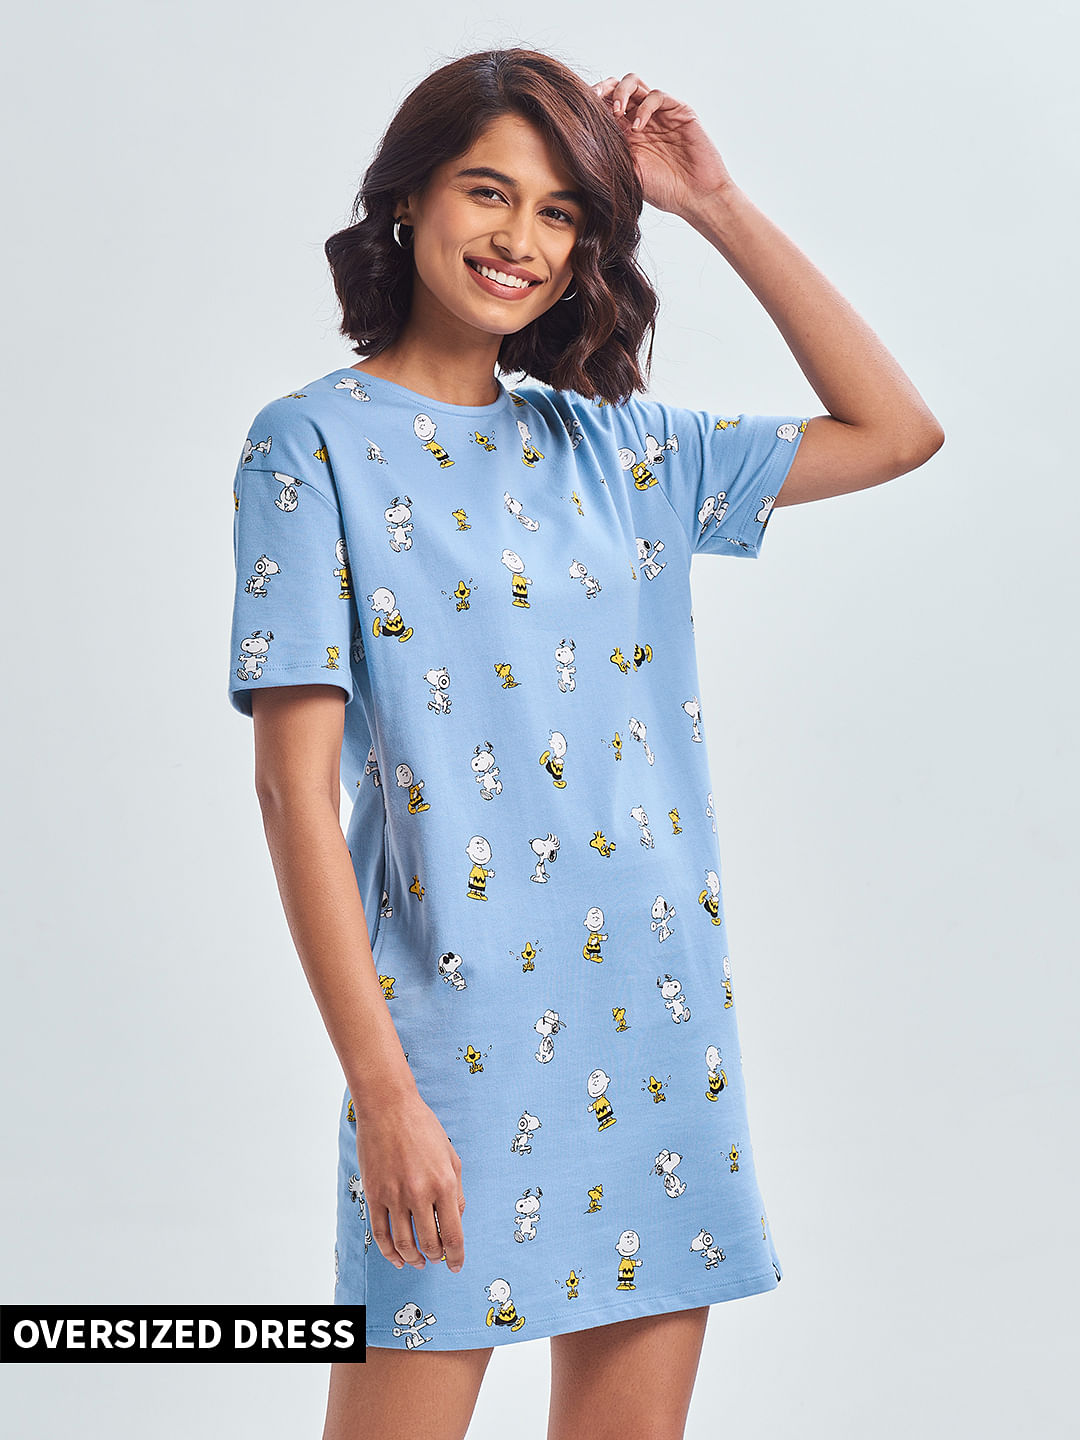 Pyjamas Sets Cotton Fabric Made S M L XL Disney Licensed Original Sleepwear Nightdress Nightie Womens Ladies Sleeping Nightshirt 